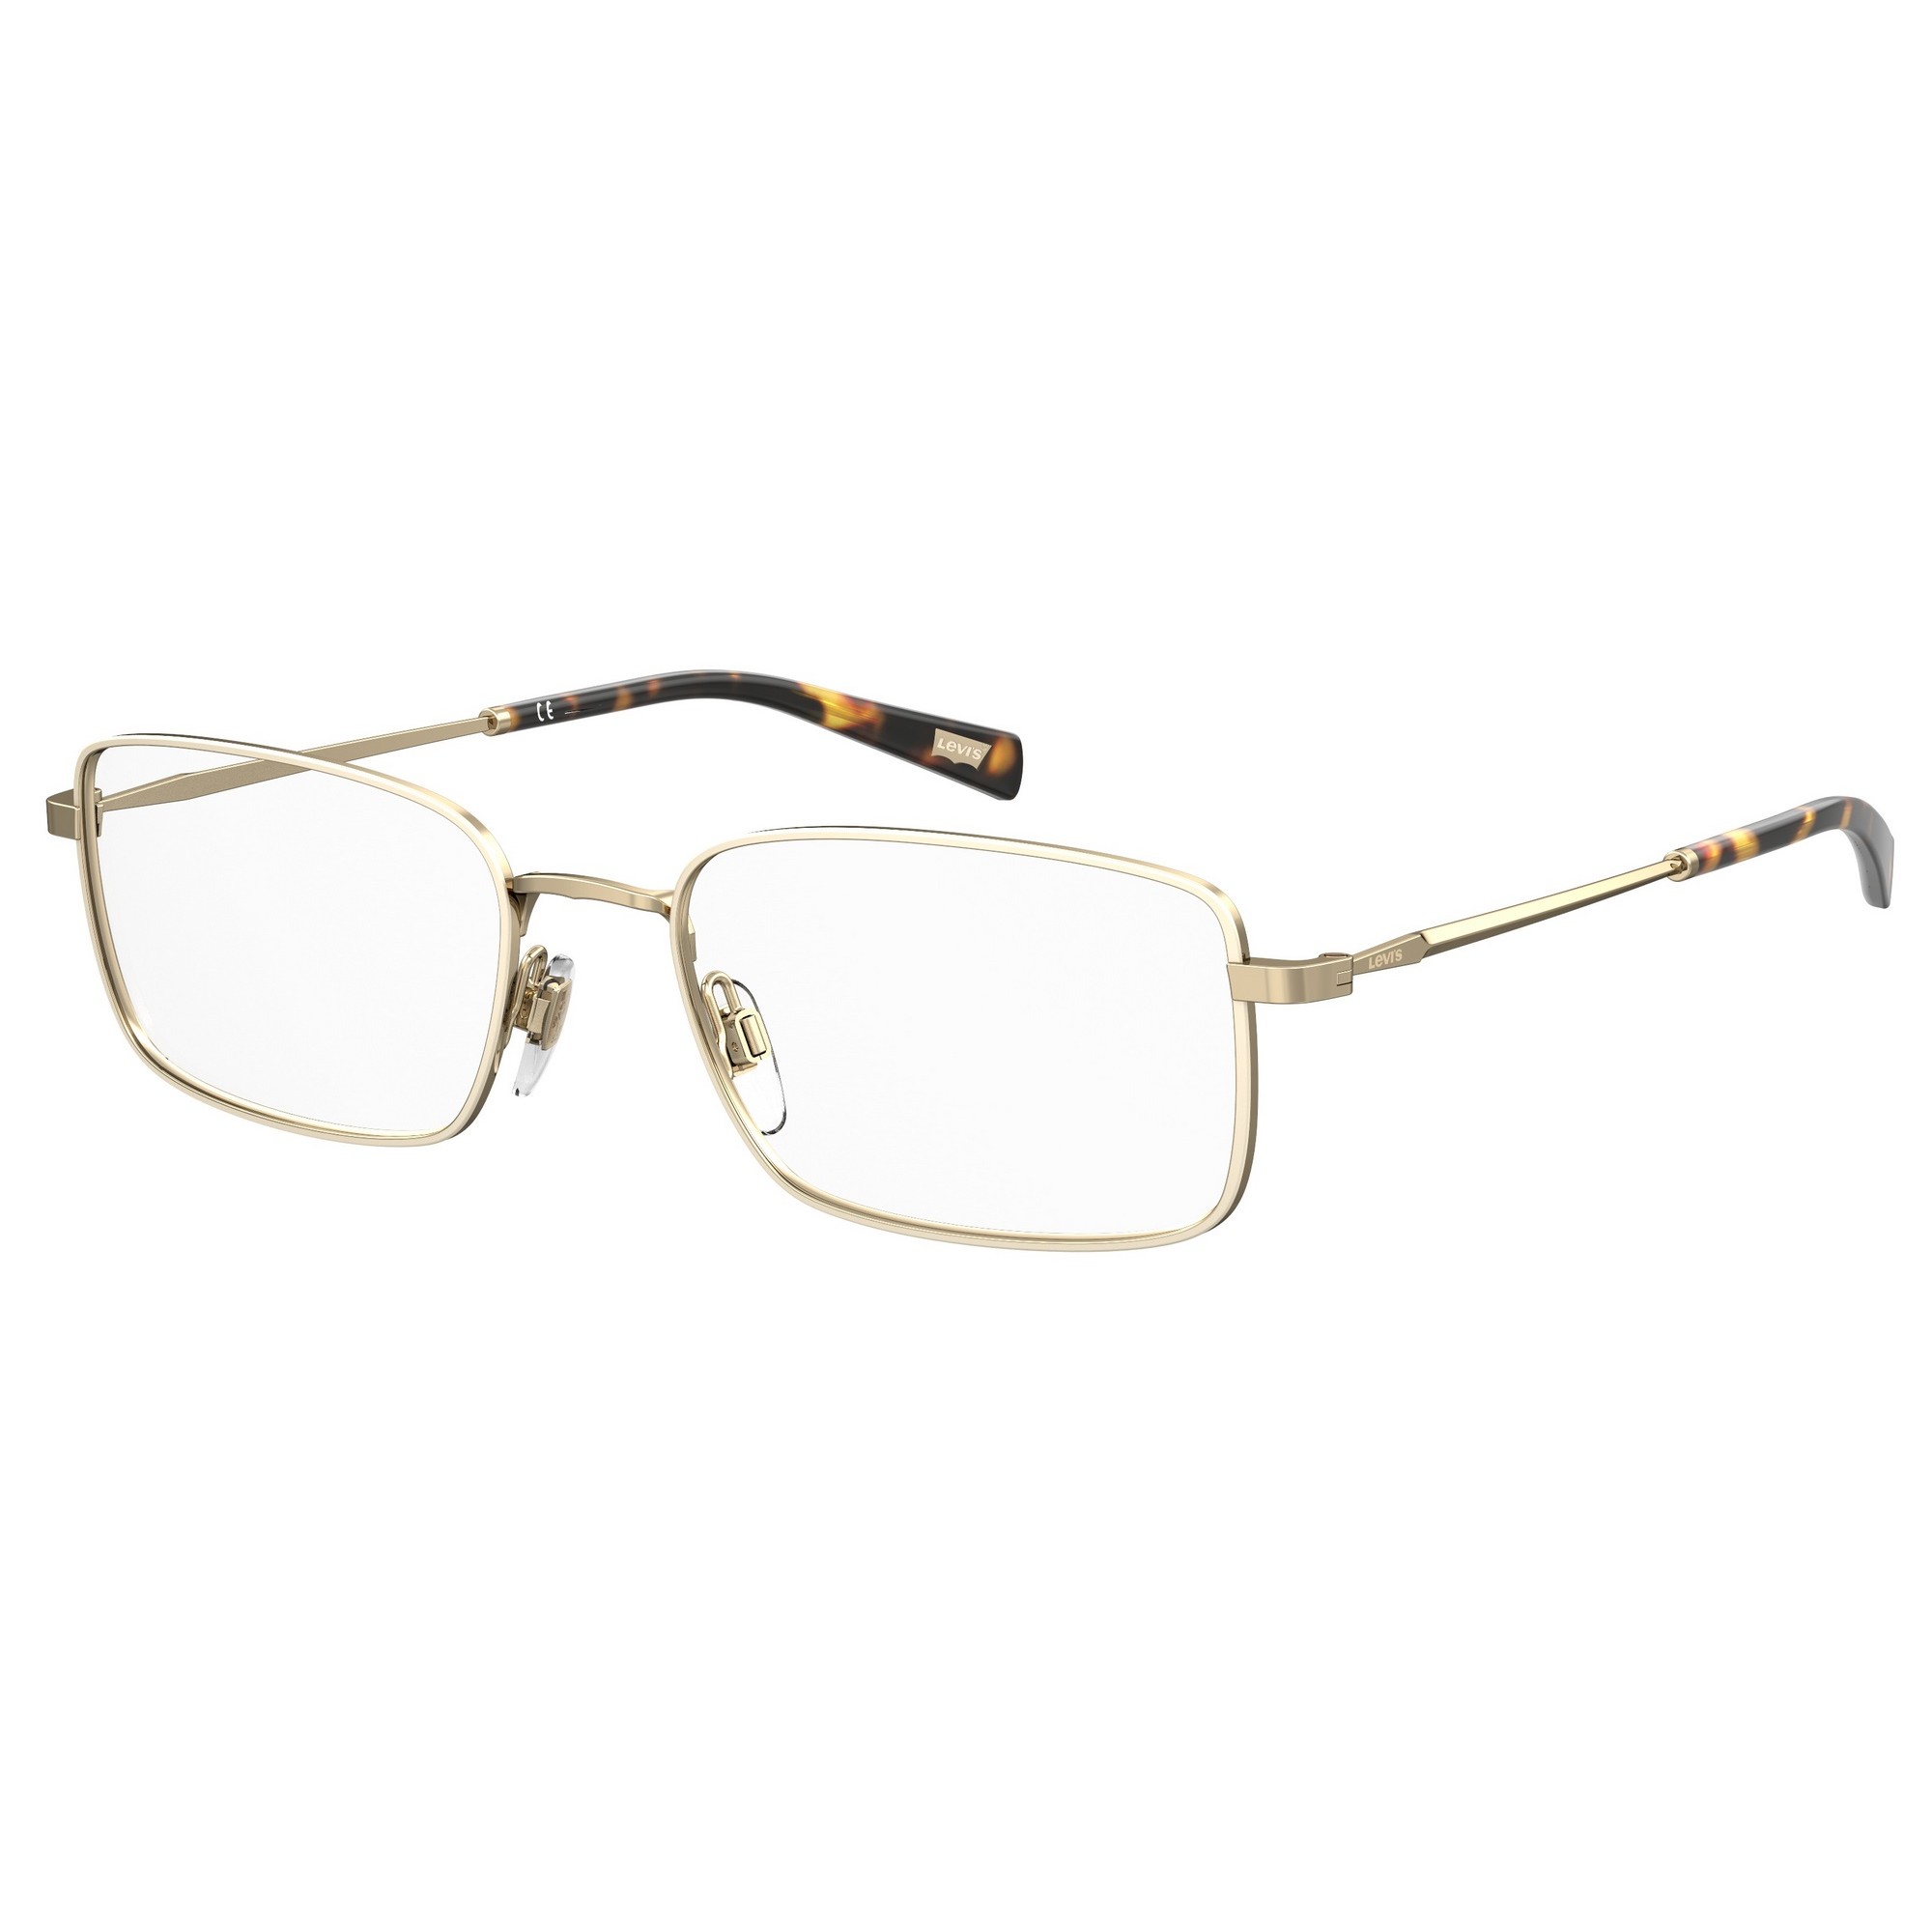 Levis LV 5039 - J5G Gold | Eyeglasses Man